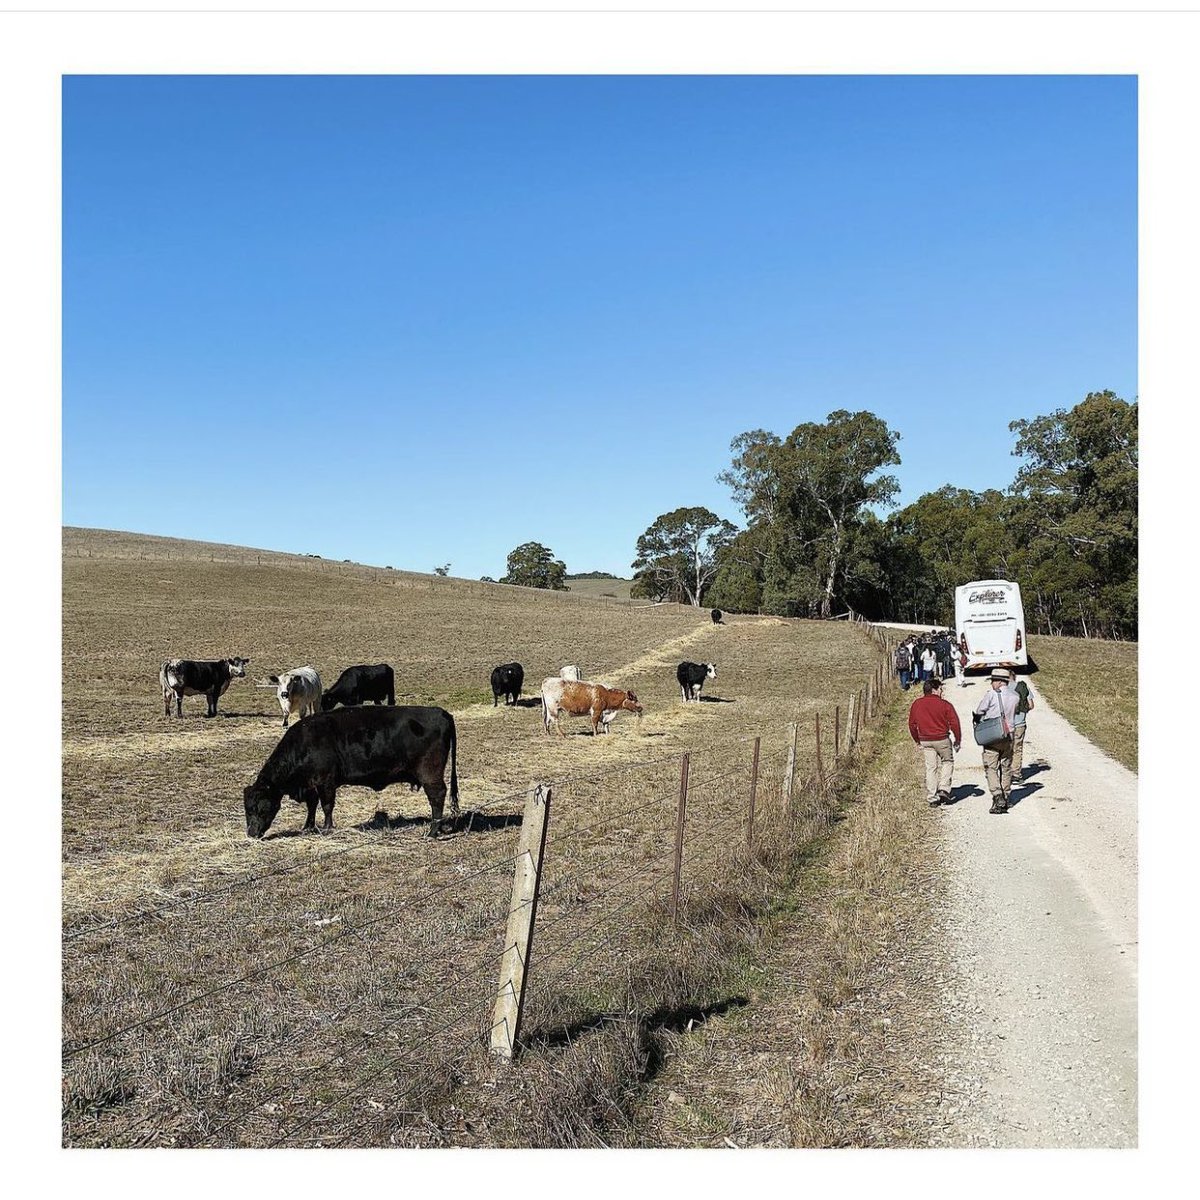 Ag Prac - Field trip to a cattle stud
———————
#cattle #cattlestud #cows #farming #cowfarm #cattlefarm #cattlestuds #farm #australianfarm #farmingaustralia #agriculturescience #agricultureaustralia #agriculture #agribusiness #cowsofinstagram #cowsmakemehappy #farmingphotos